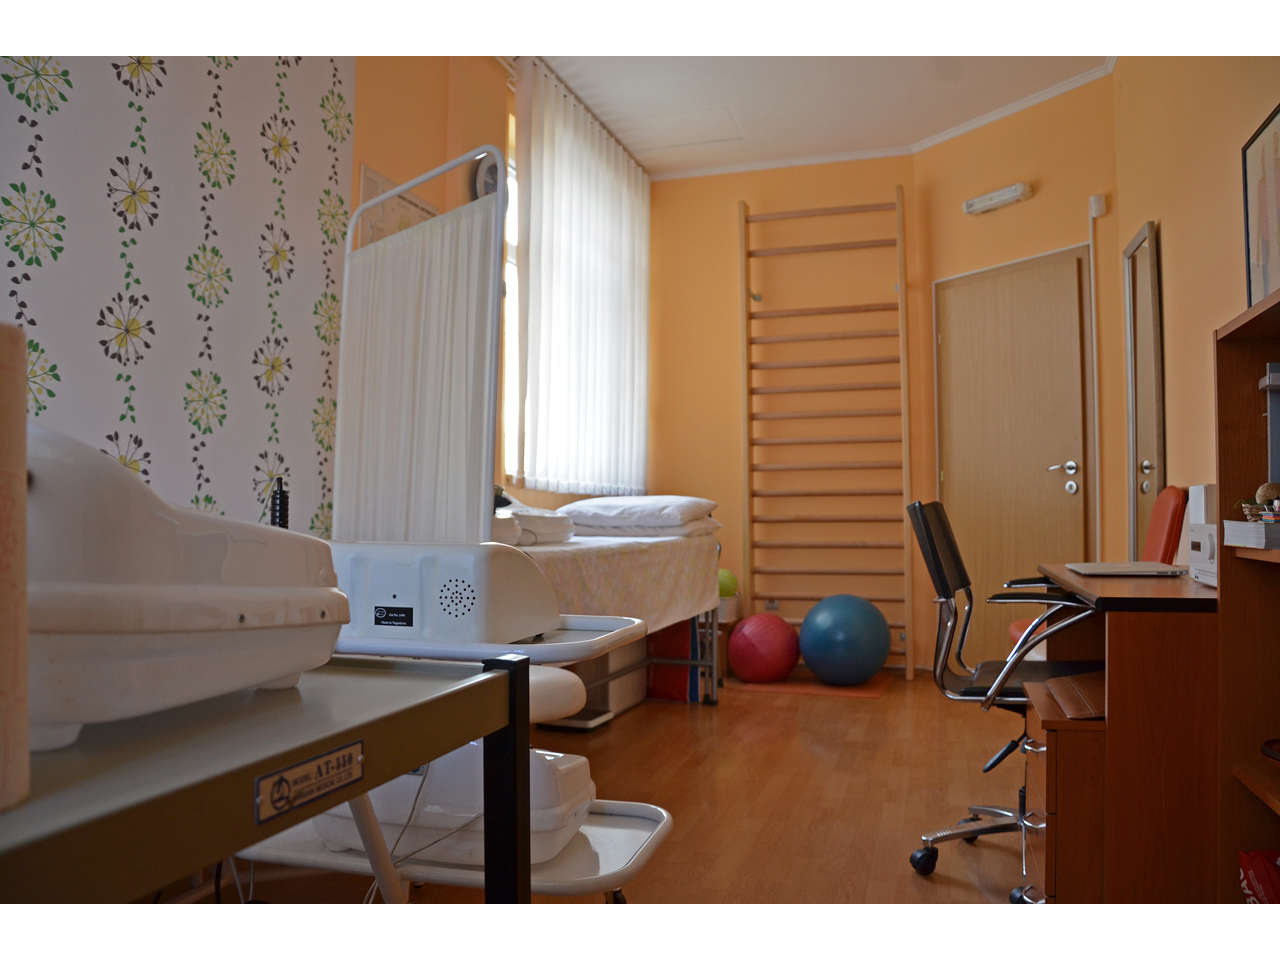 Slika 6 - ORTHO CLINIC - SPECIJALISTIČKA ORDINACIJA Ortopedija, ortopedska pomagala Beograd